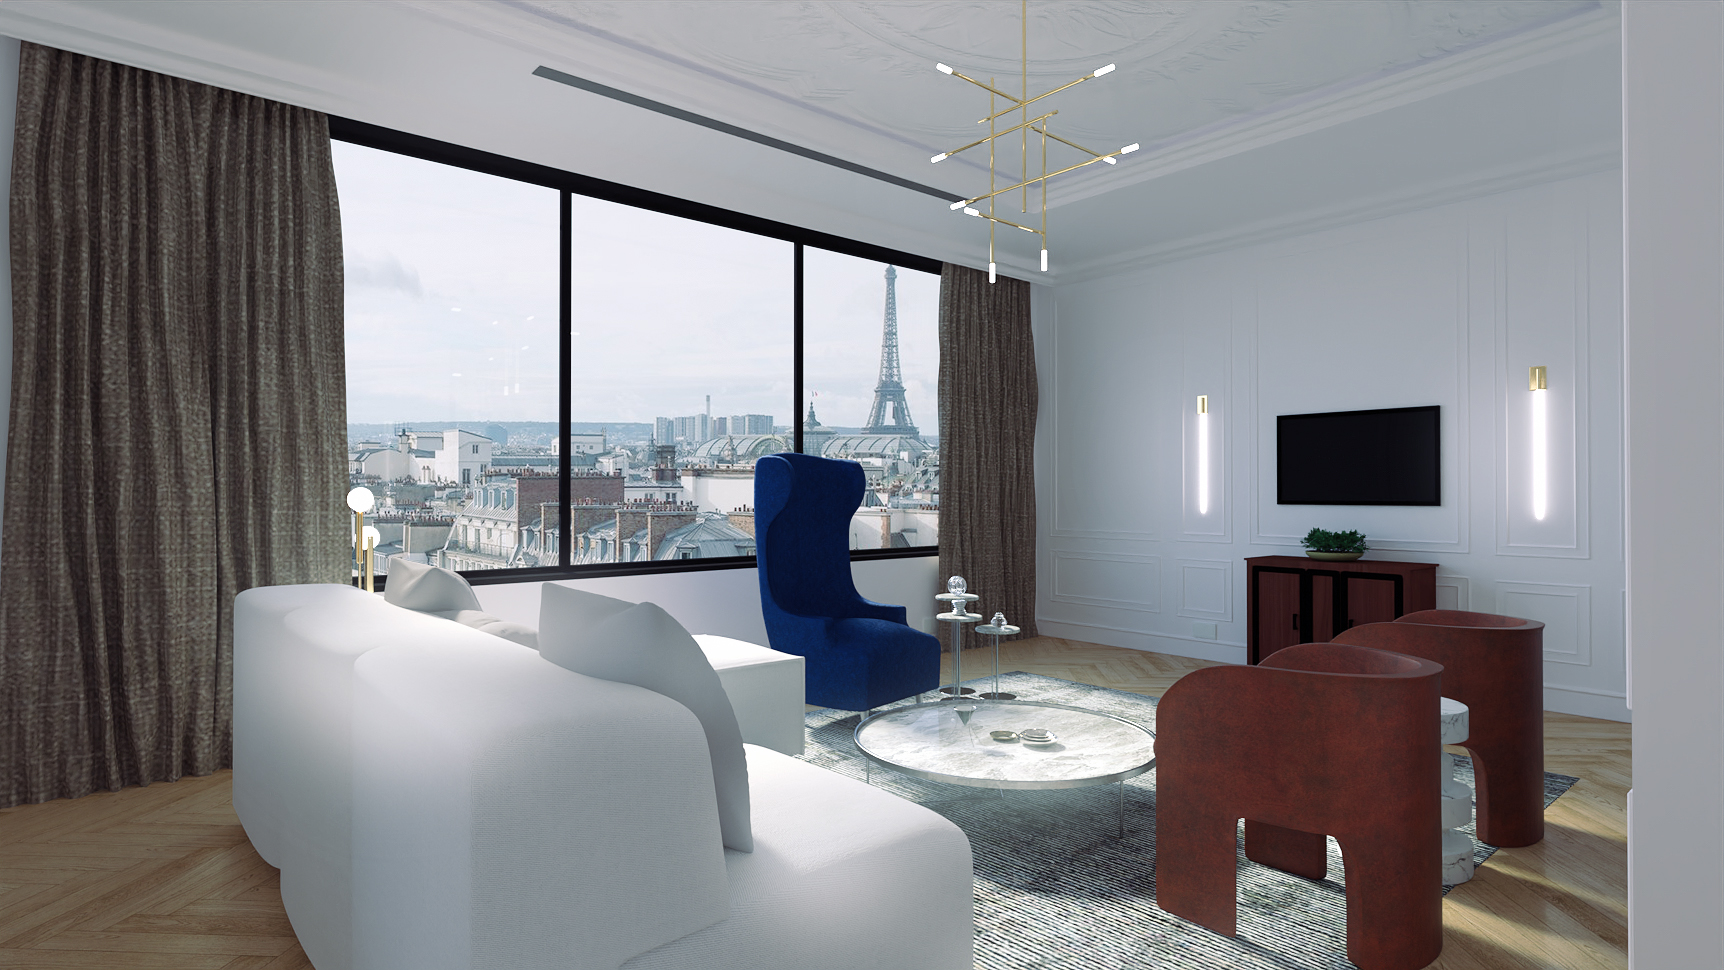 Paris Living Room by: Digitallab3D, 3D Models by Daz 3D